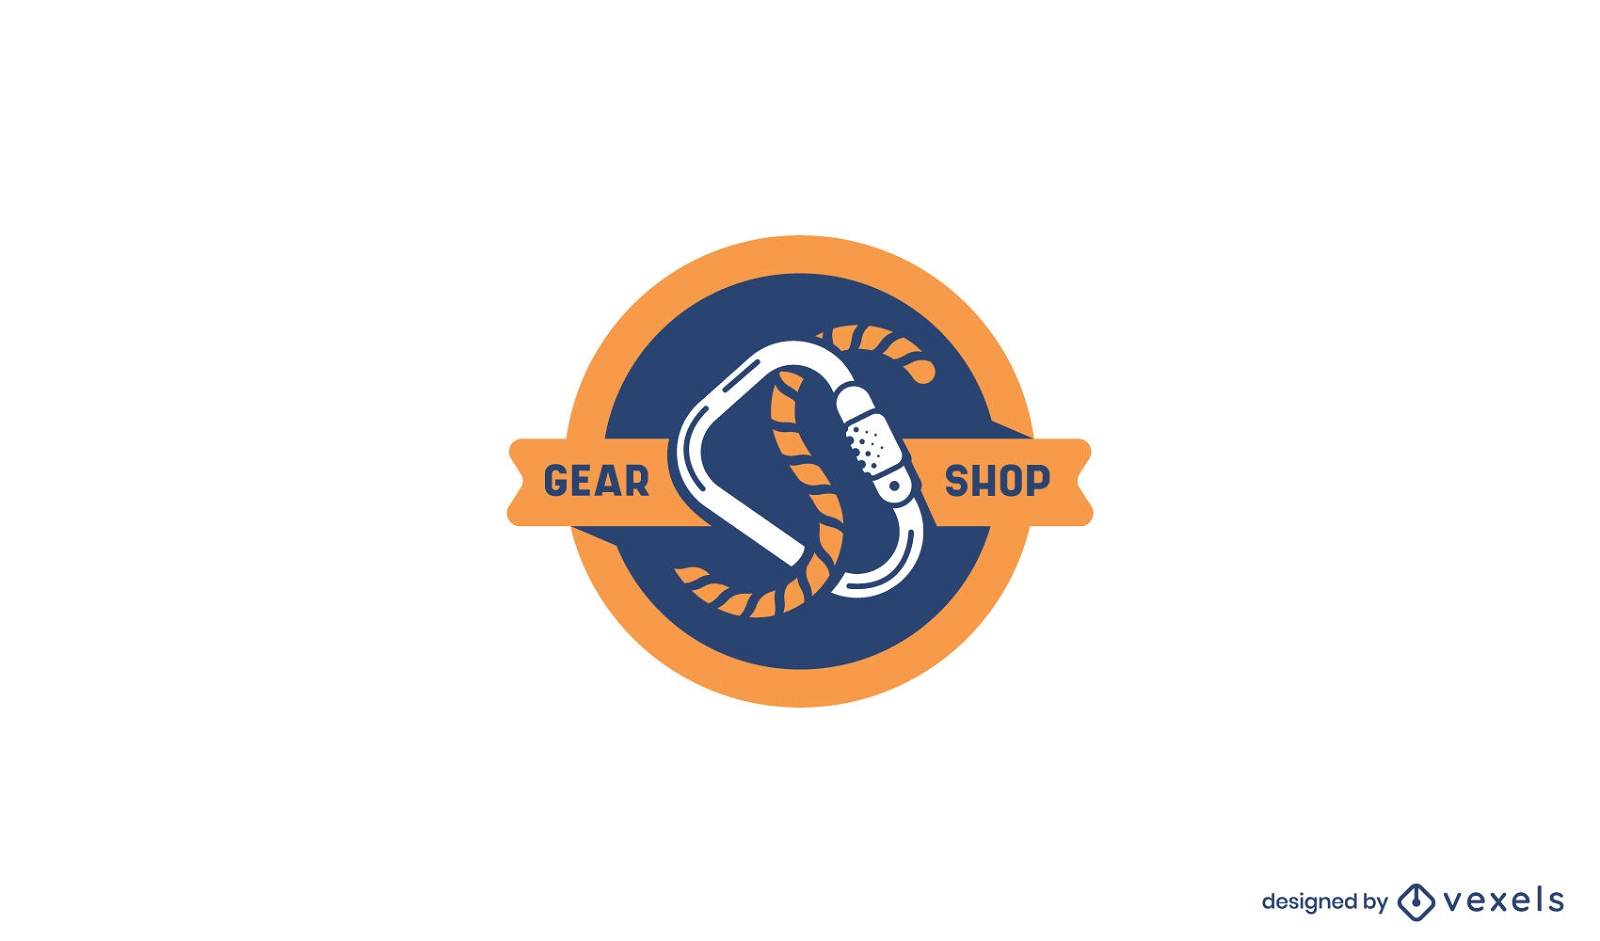 Gear shop adventure logo design